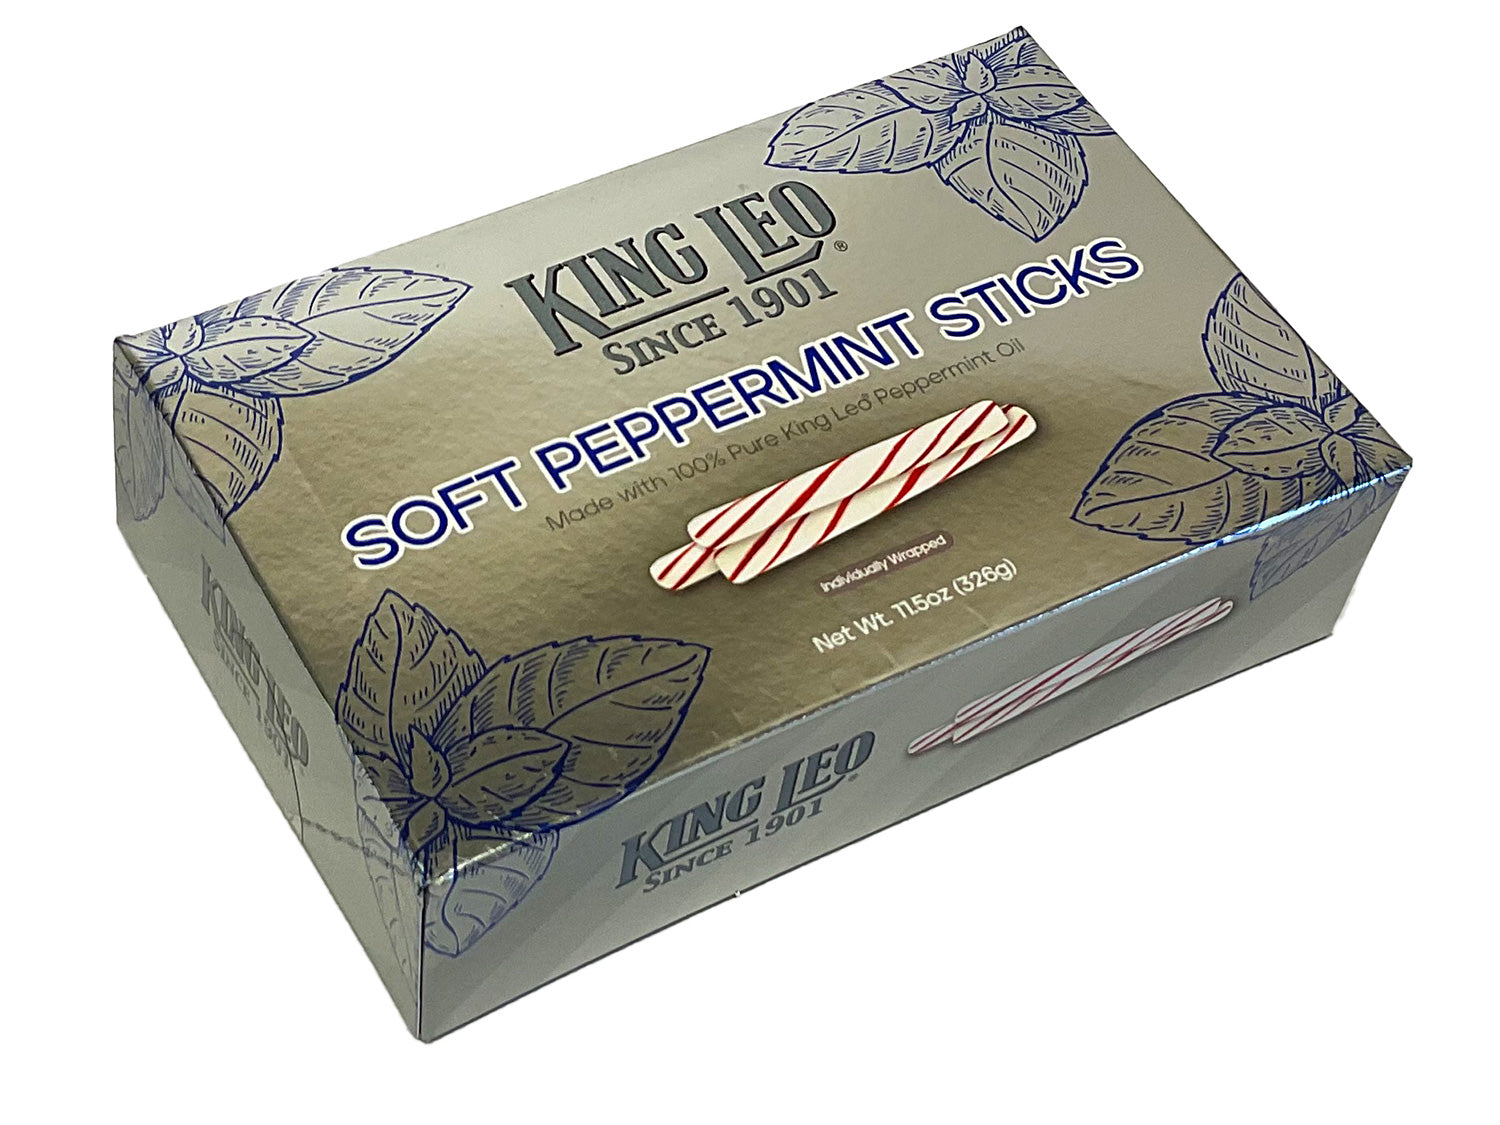 King Leo Soft Peppermint Sticks - 11.5 oz Silver Box